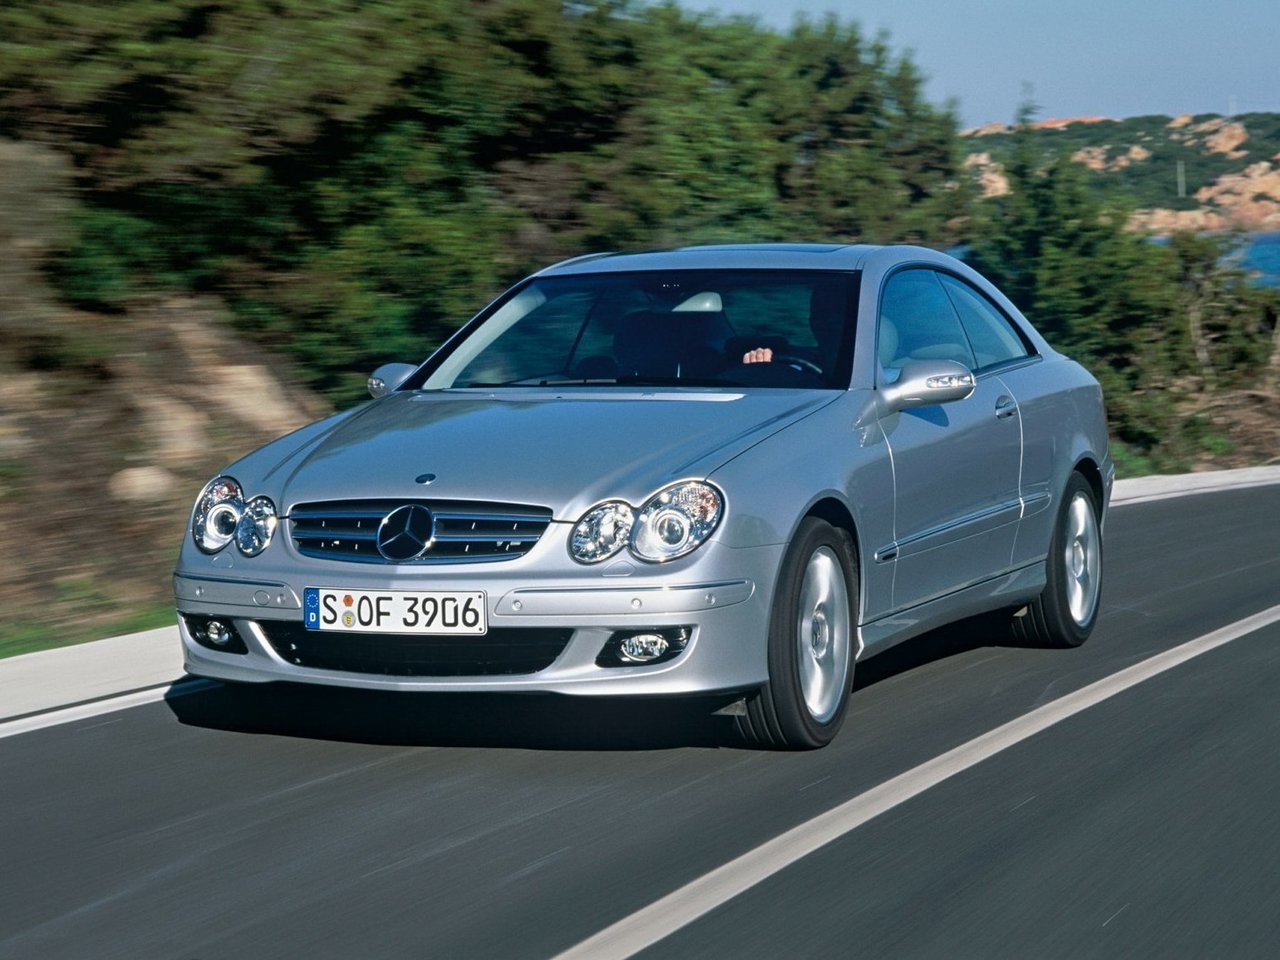 Расход газа одинадцати комплектаций купе-хардтопа Mercedes-Benz CLK-klasse. Разница стоимости заправки газом и бензином. Автономный пробег до и после установки ГБО.